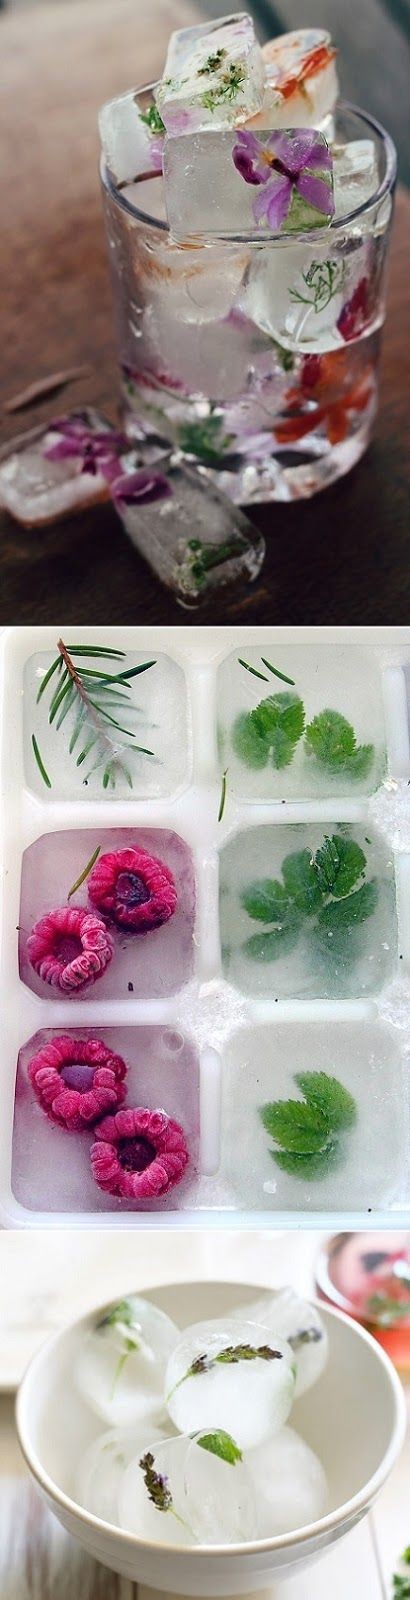 DIY :: edible flower ice cubes, raspberry + herbs...